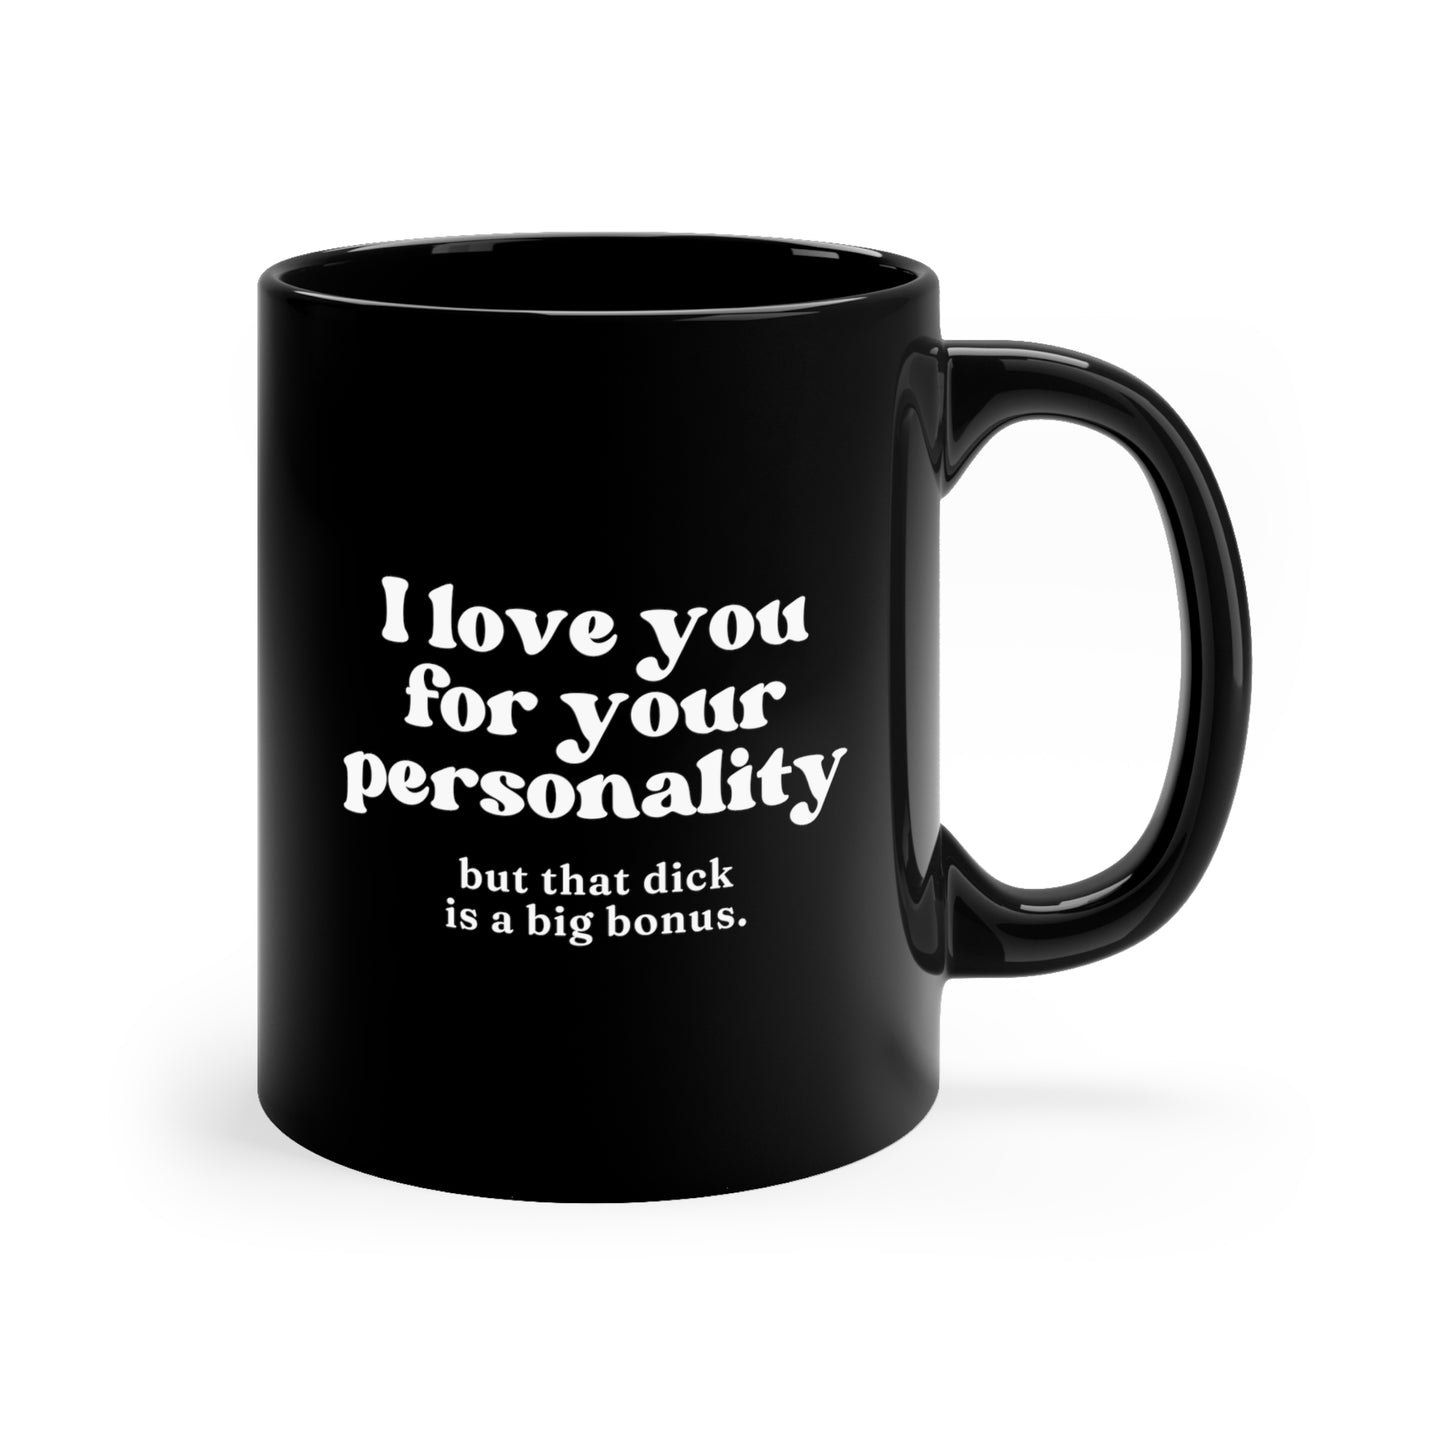 i love you for your personality 11oz black funny coffee mug tea cup gift for him boyfriend husband valentines anniversary joke wedding gag gift waveywares wavey wares